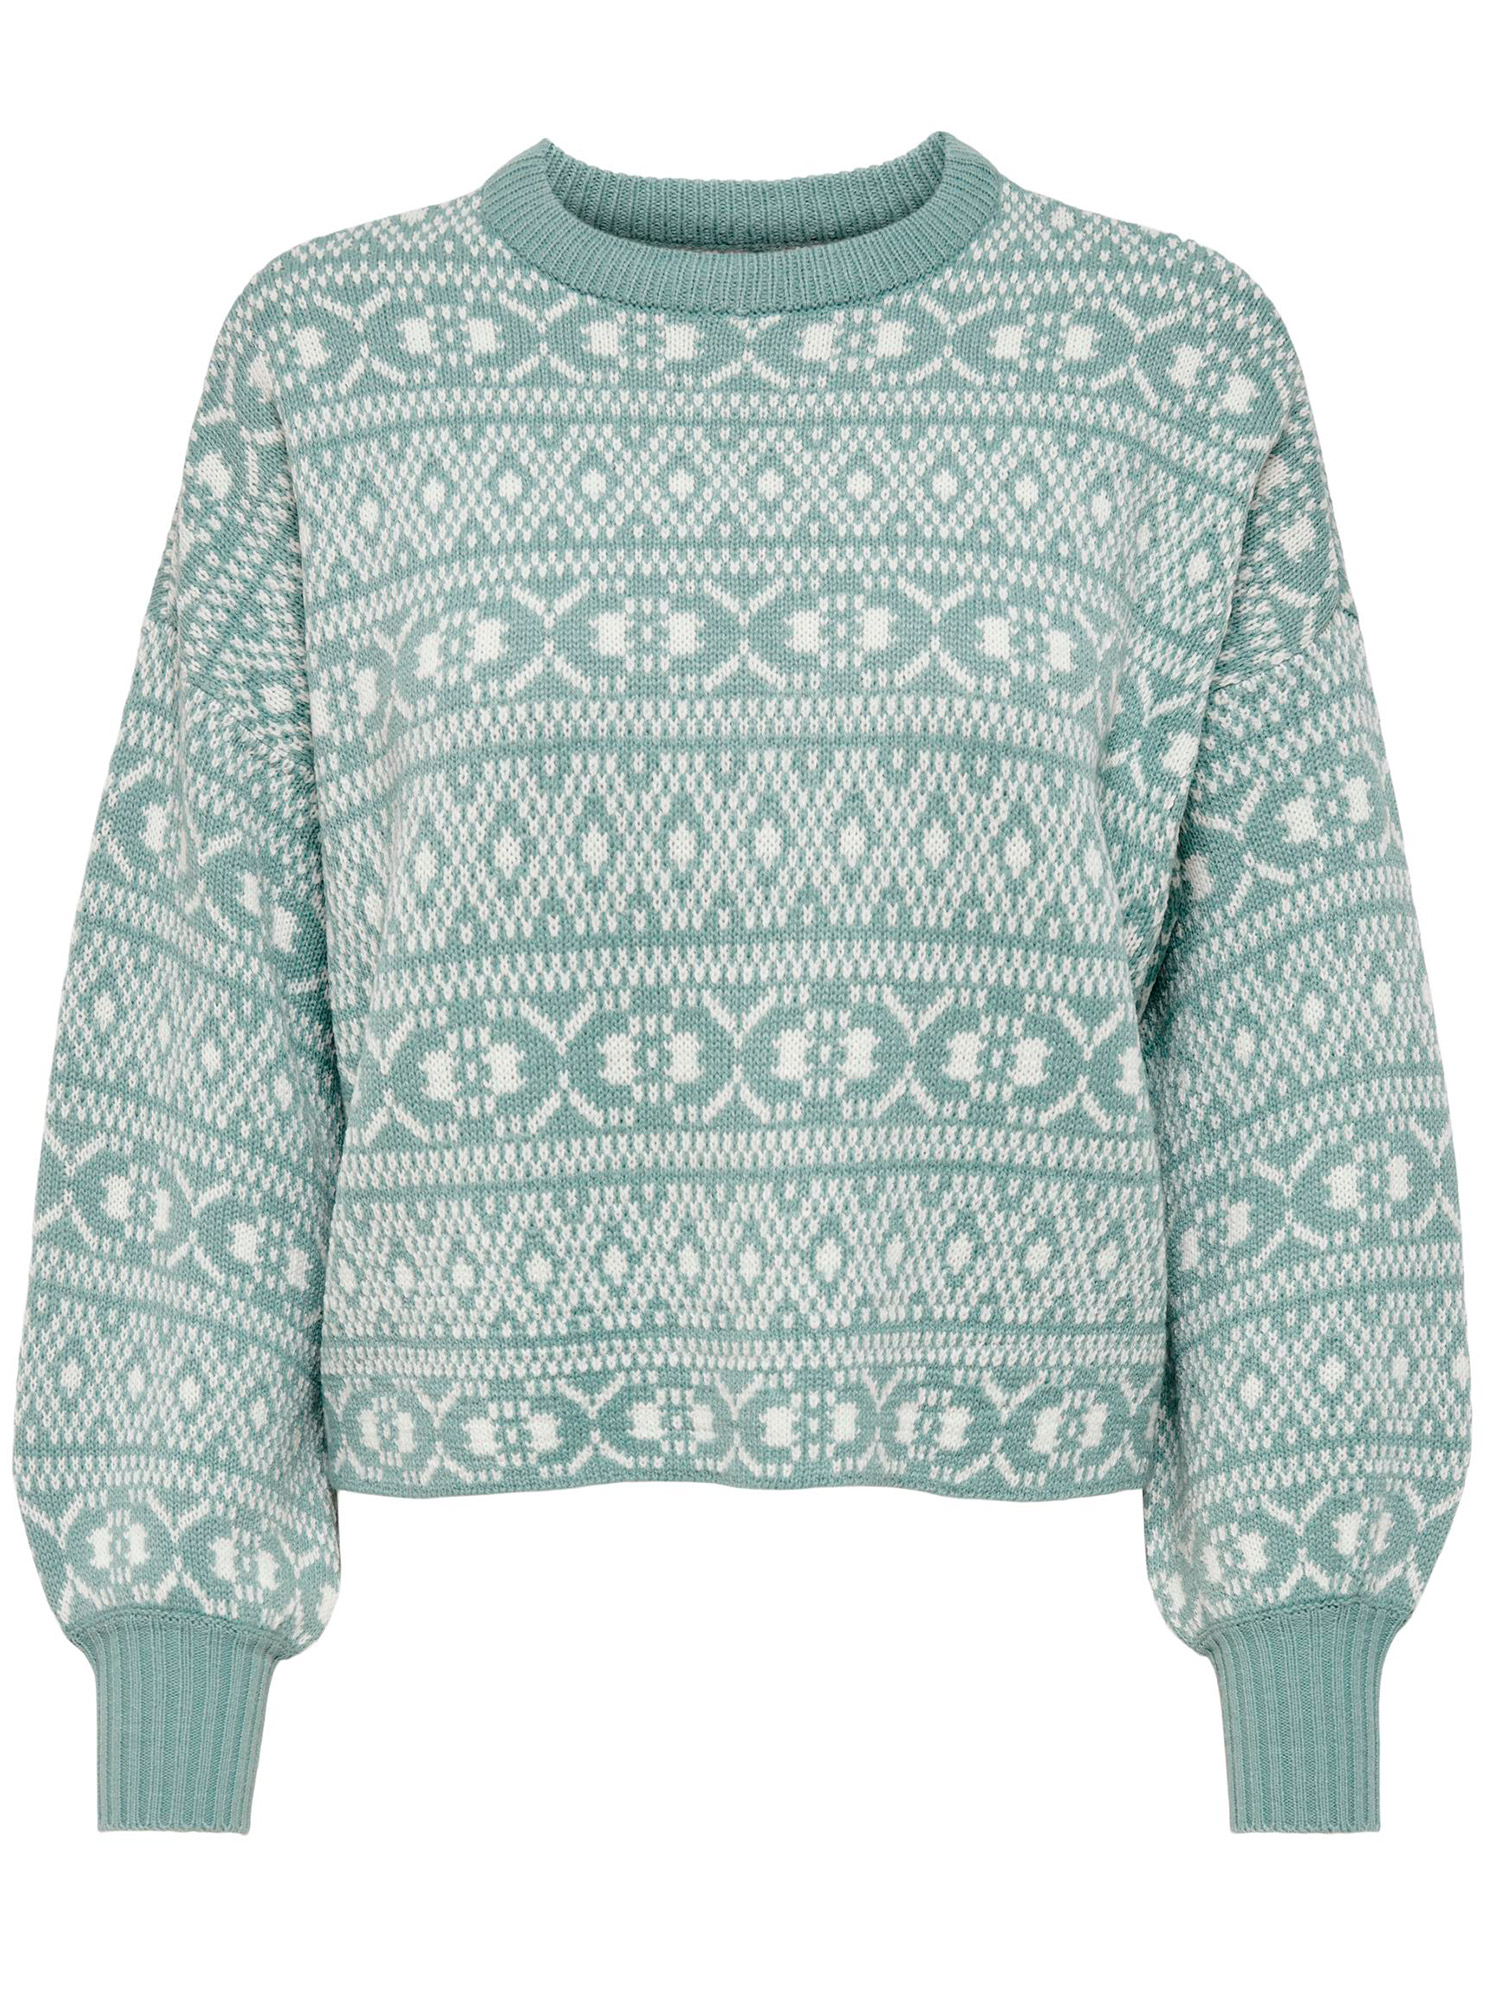 SIGRUN - Mintgrønn strikket genser med mønster fra Only Carmakoma